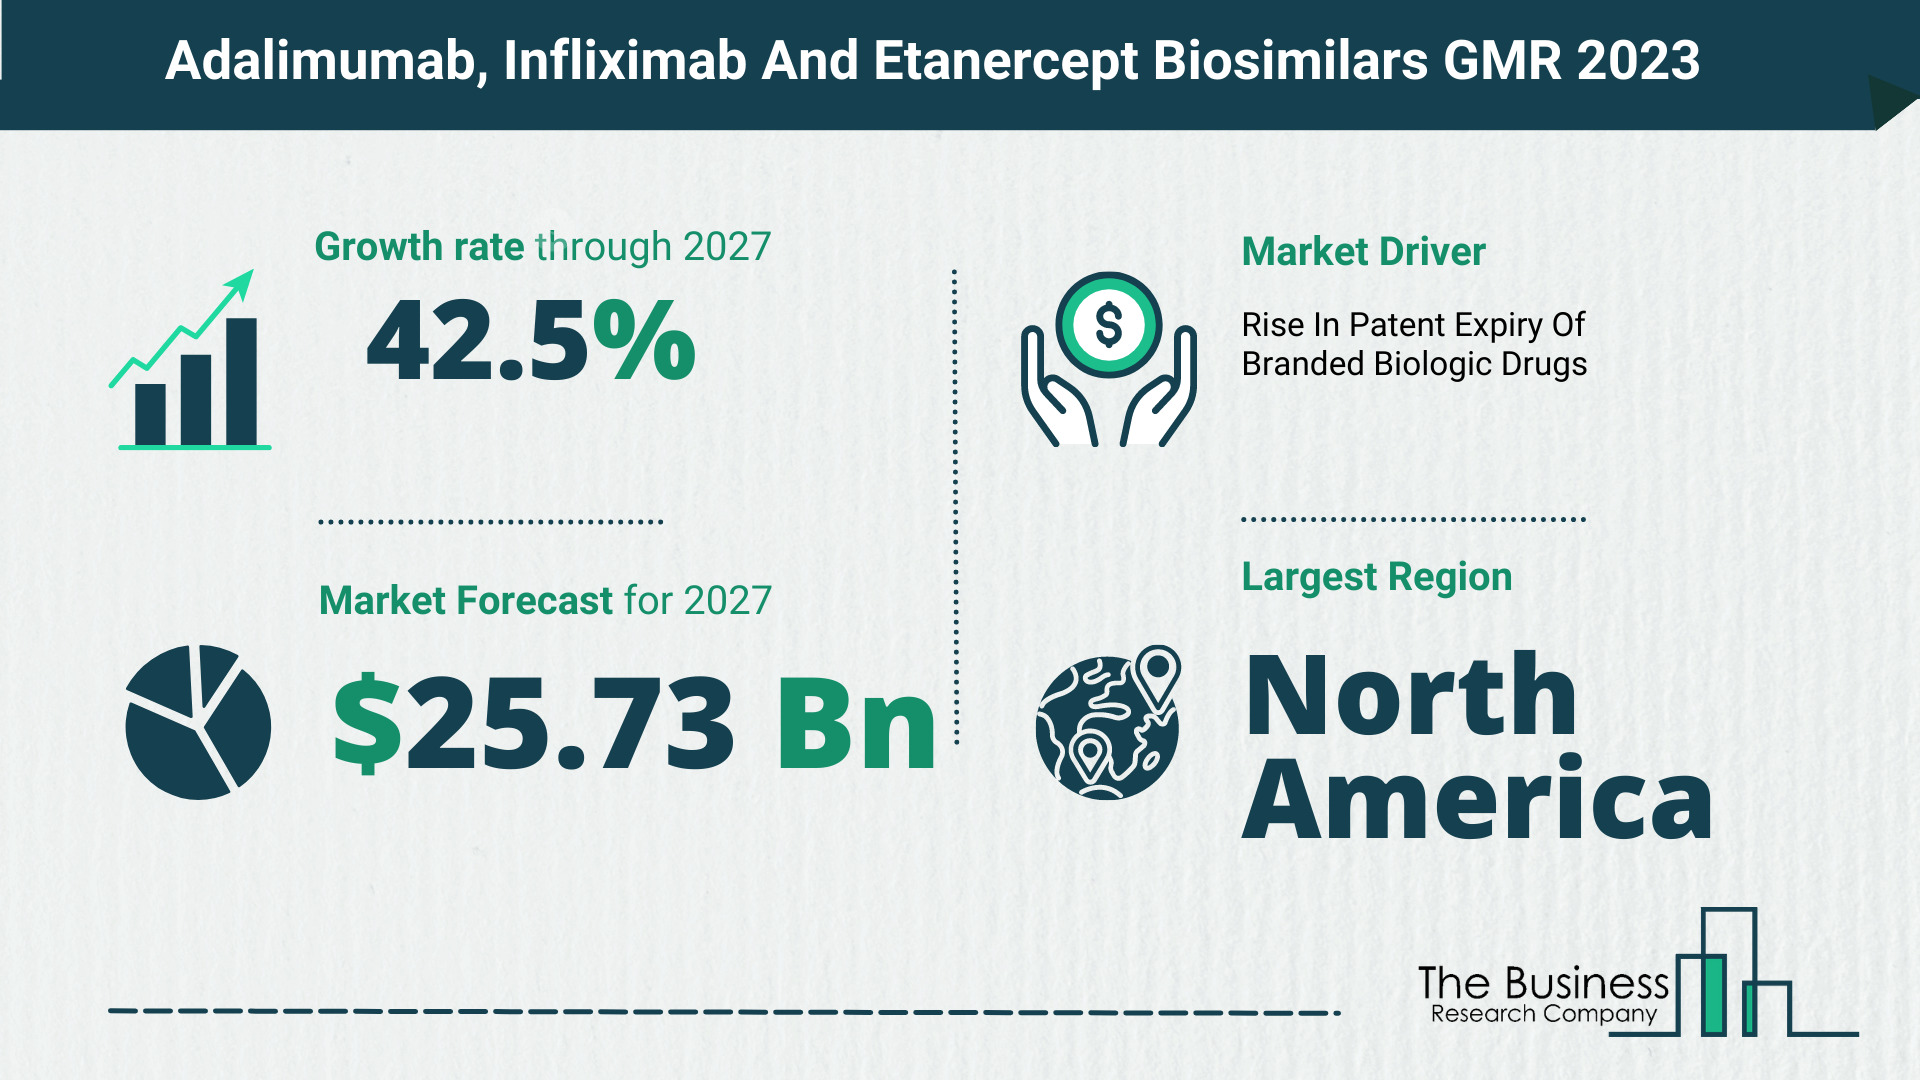 Adalimumab, Infliximab And Etanercept Biosimilars Market Overview: Market Size, Drivers And Trends